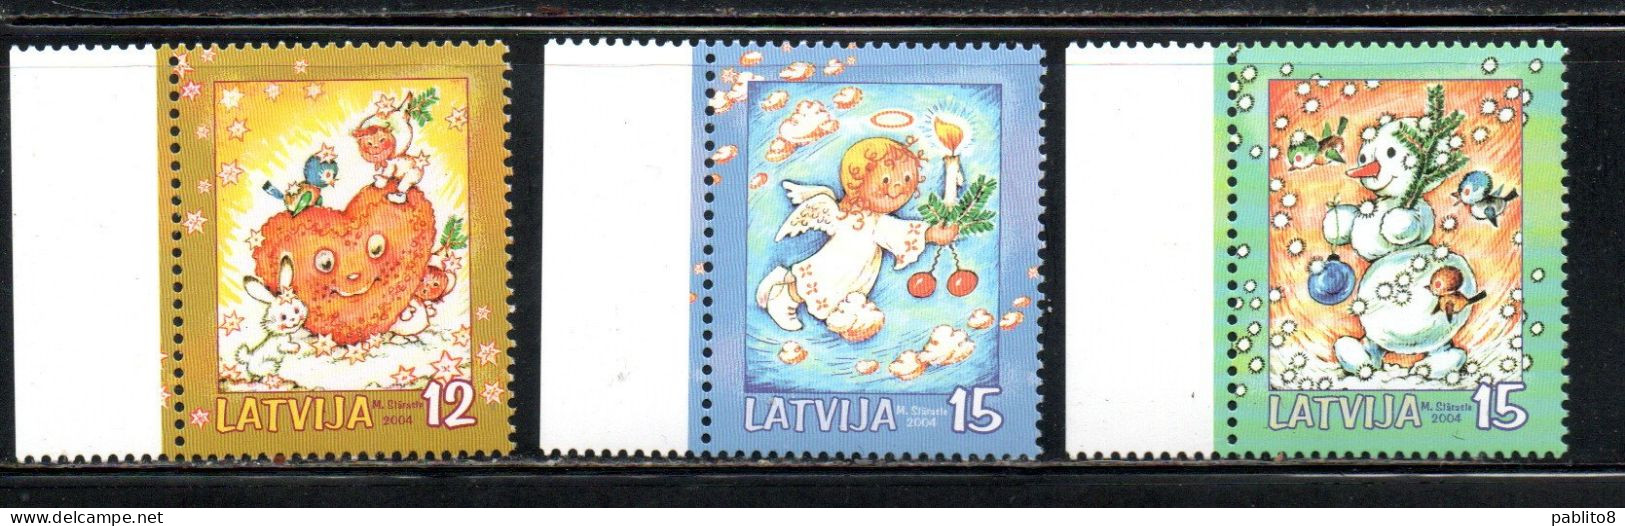 LATVIA LETTLAND LETTONIA LATVIJA 2004 CHRISTMAS NATALE NOEL WEIHNACHTEN NAVIDAD COMPLETE SET SERIE COMPLETA MNH - Lettonie